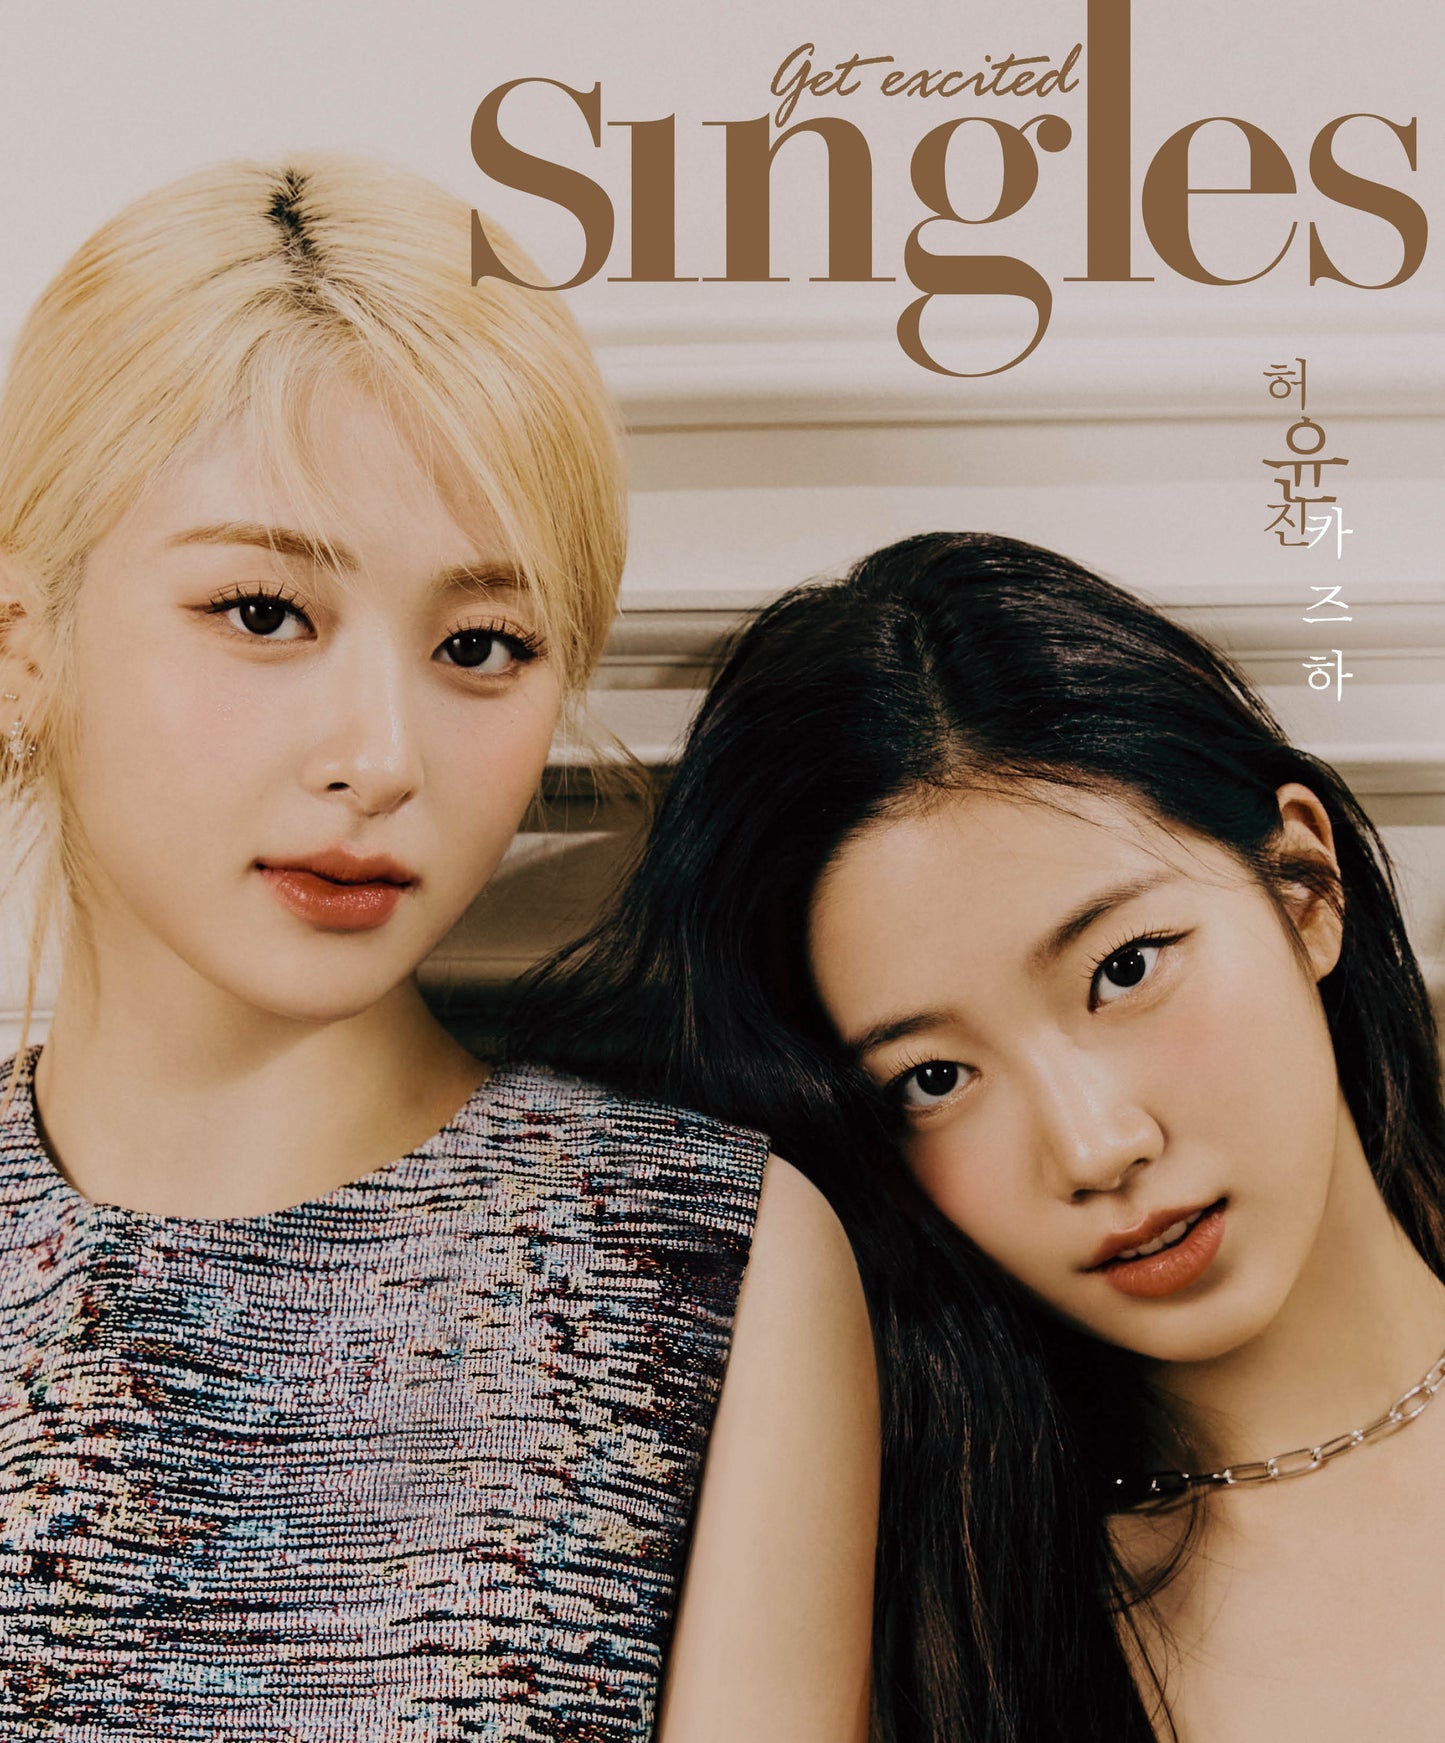 Singles | 2023 JAN. | LE SSERAFIM KAZUHA & HUH YUN-JIN COVER